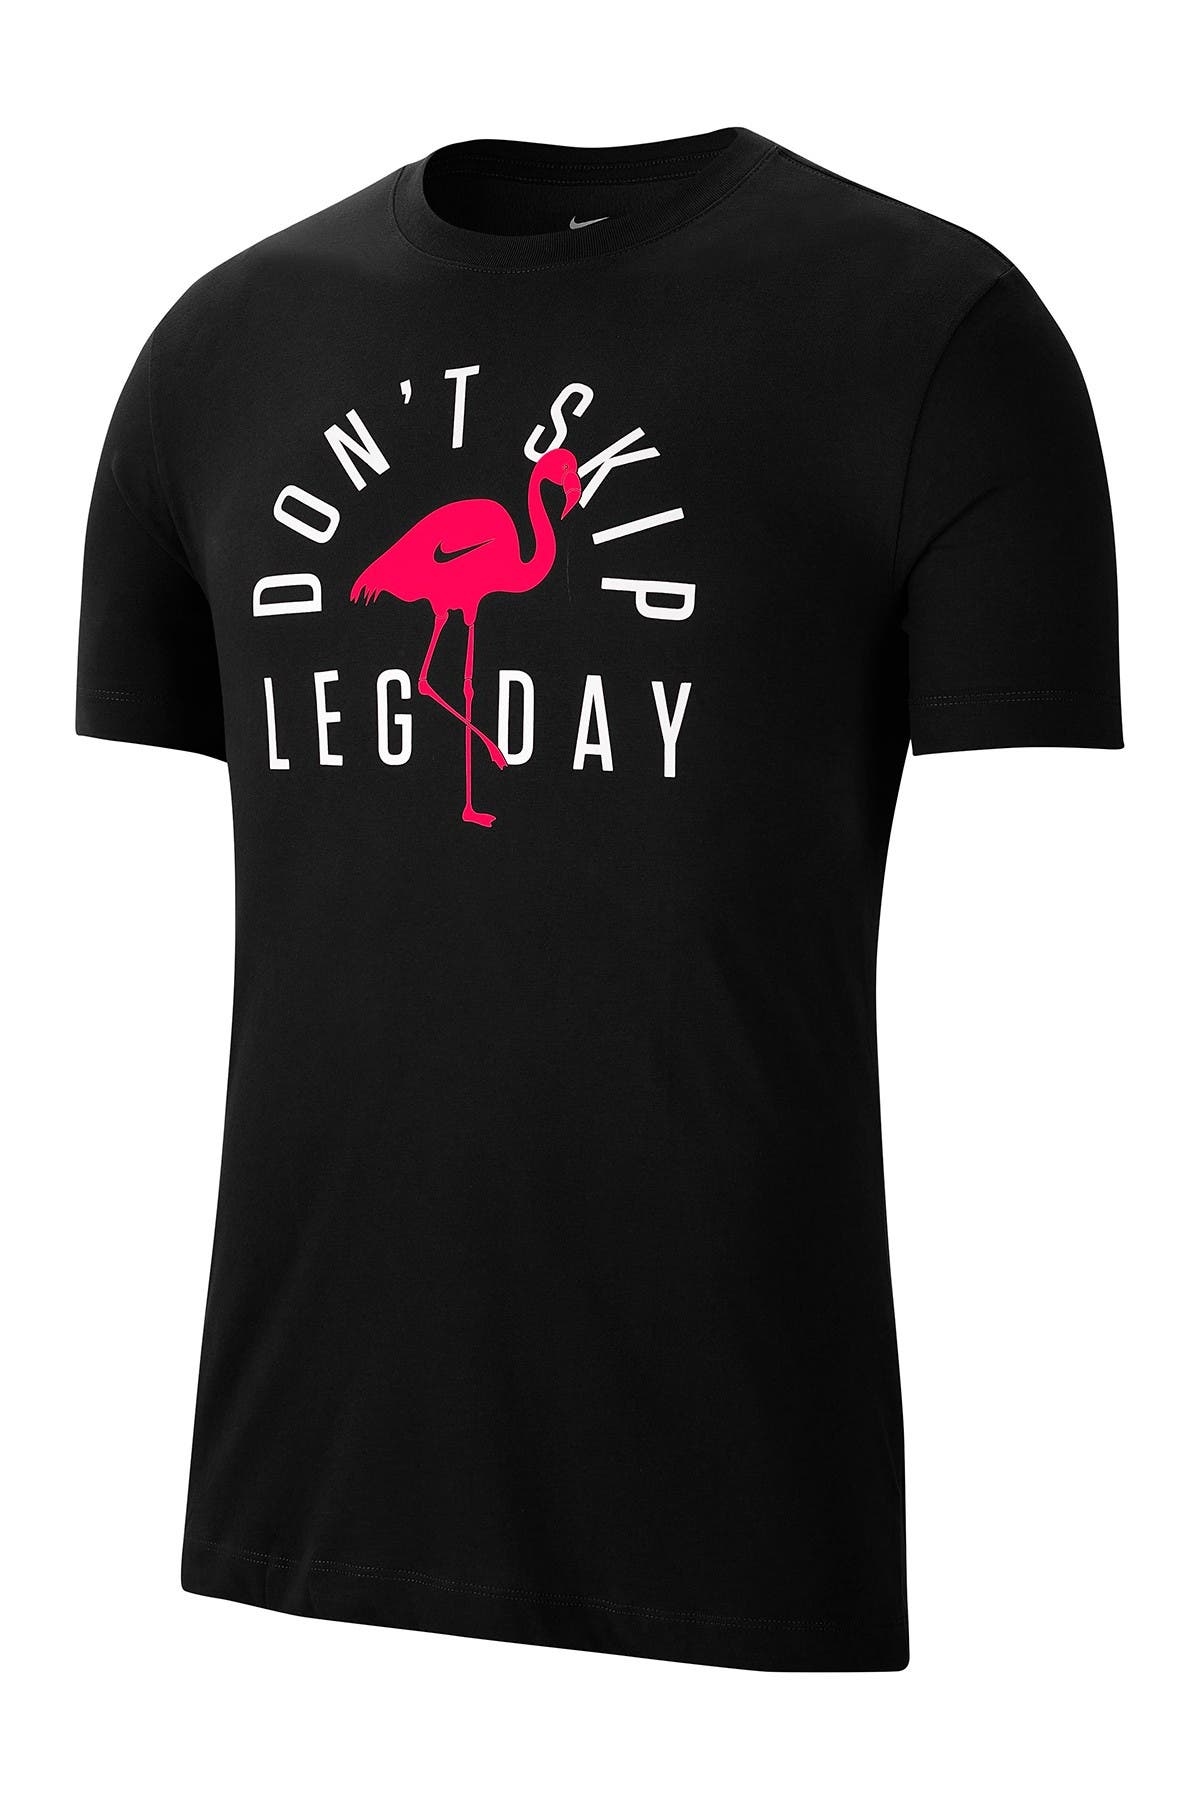 Don't Skip Leg Day Graphic T-Shirt 